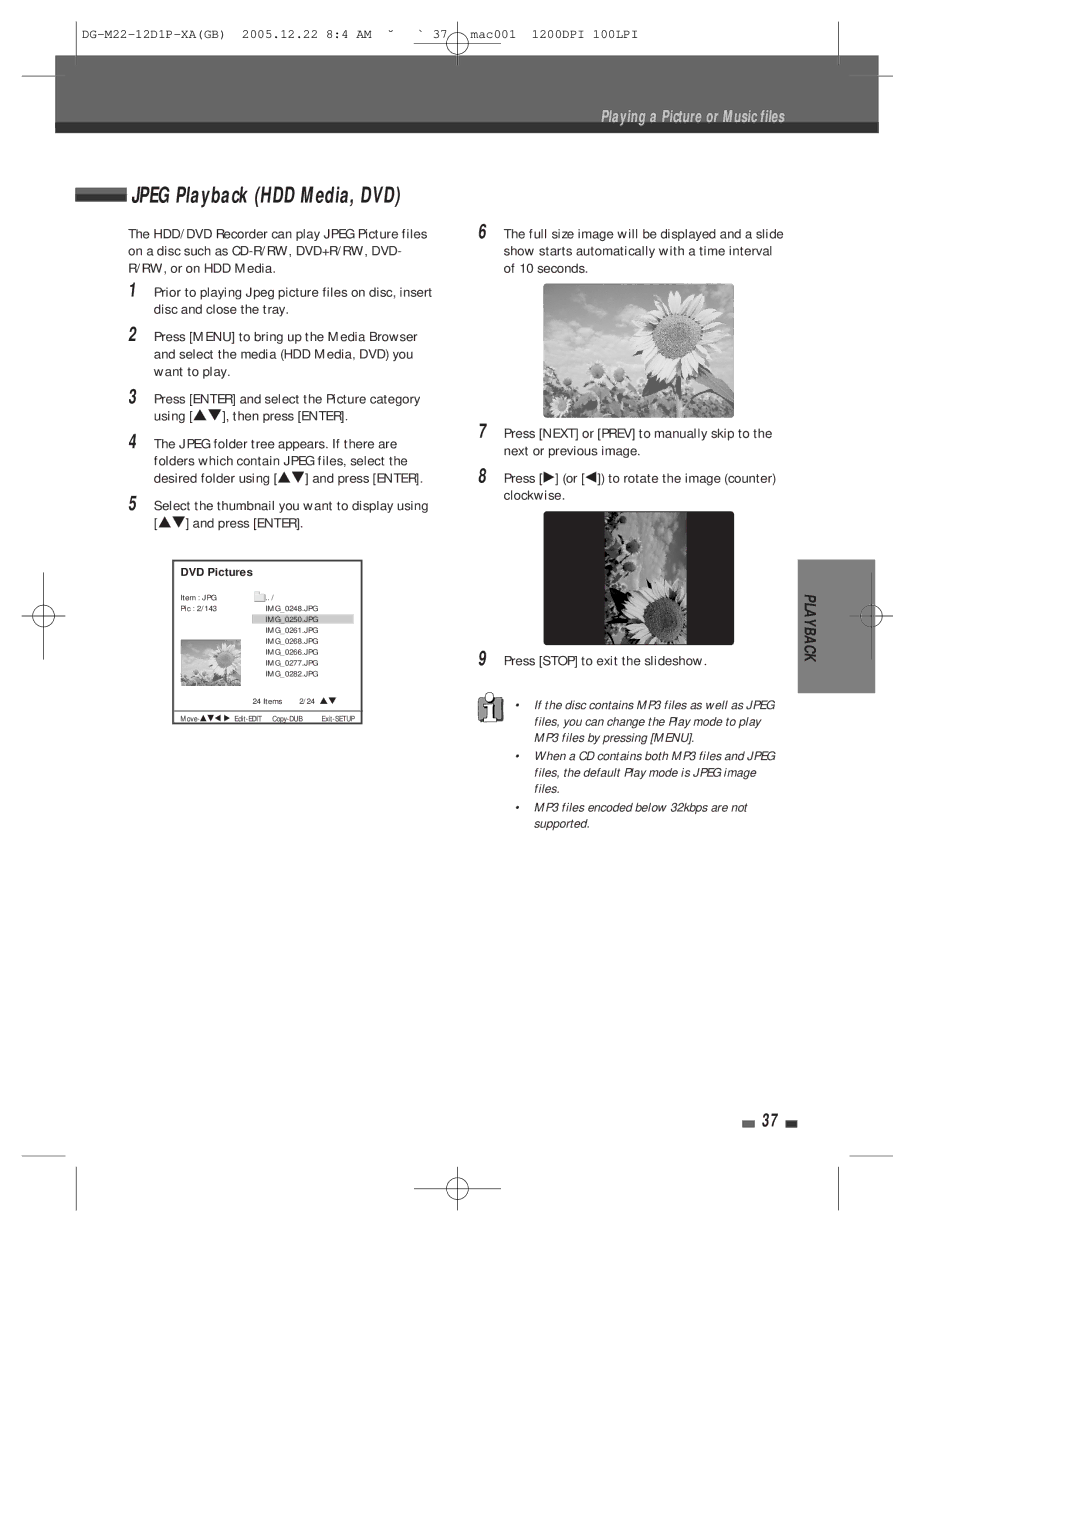 Daewoo DHR-8100P user manual Jpeg Playback HDD Media, DVD, DVD Pictures 